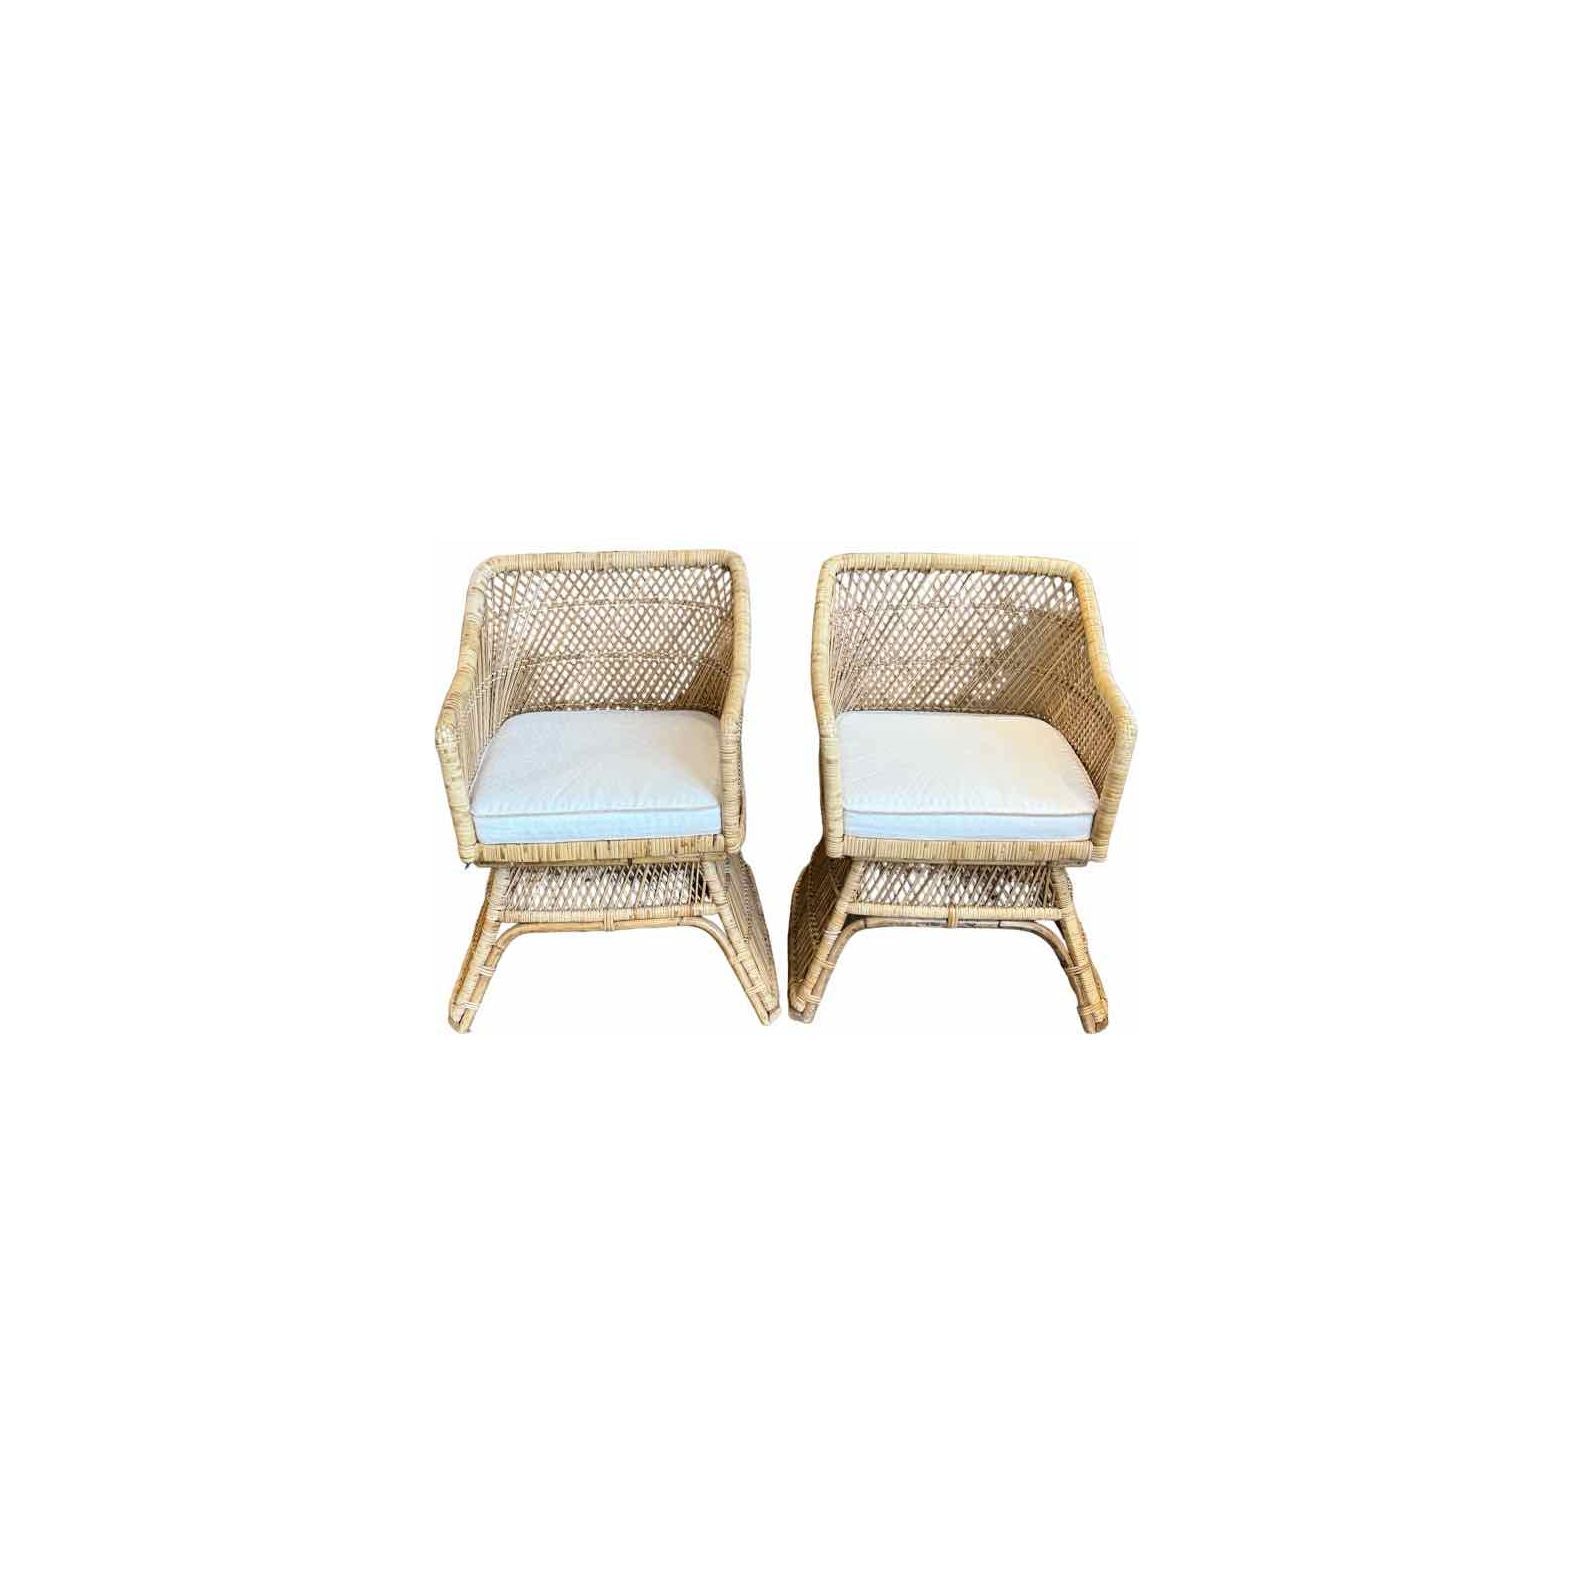 Pair of Rattan Wicker Chairs